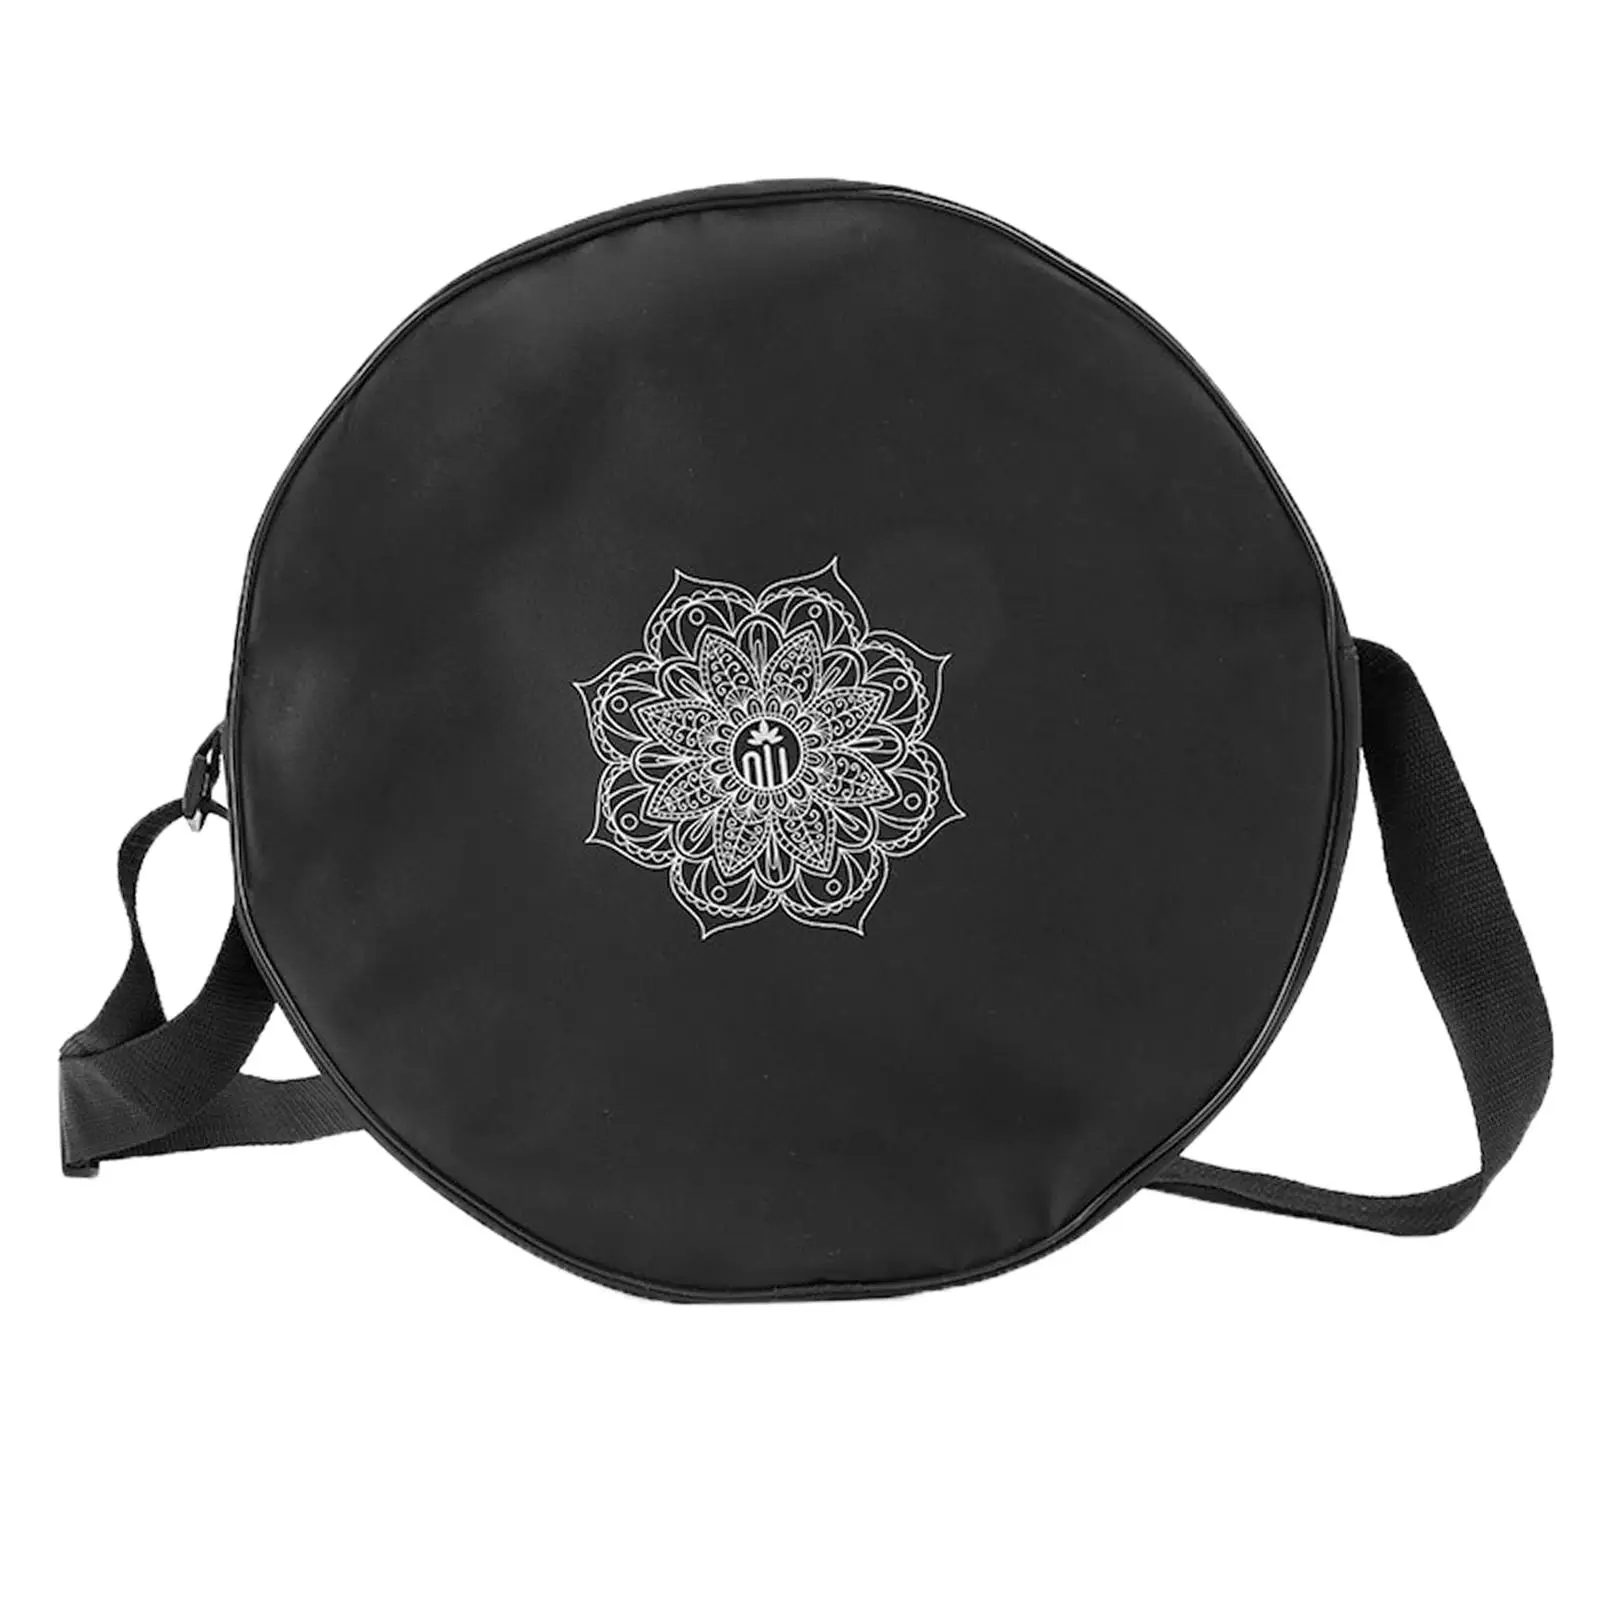 Yoga Pilates Circle Bag Pockets Waterproof Yoga Wheel Bag for Body Building